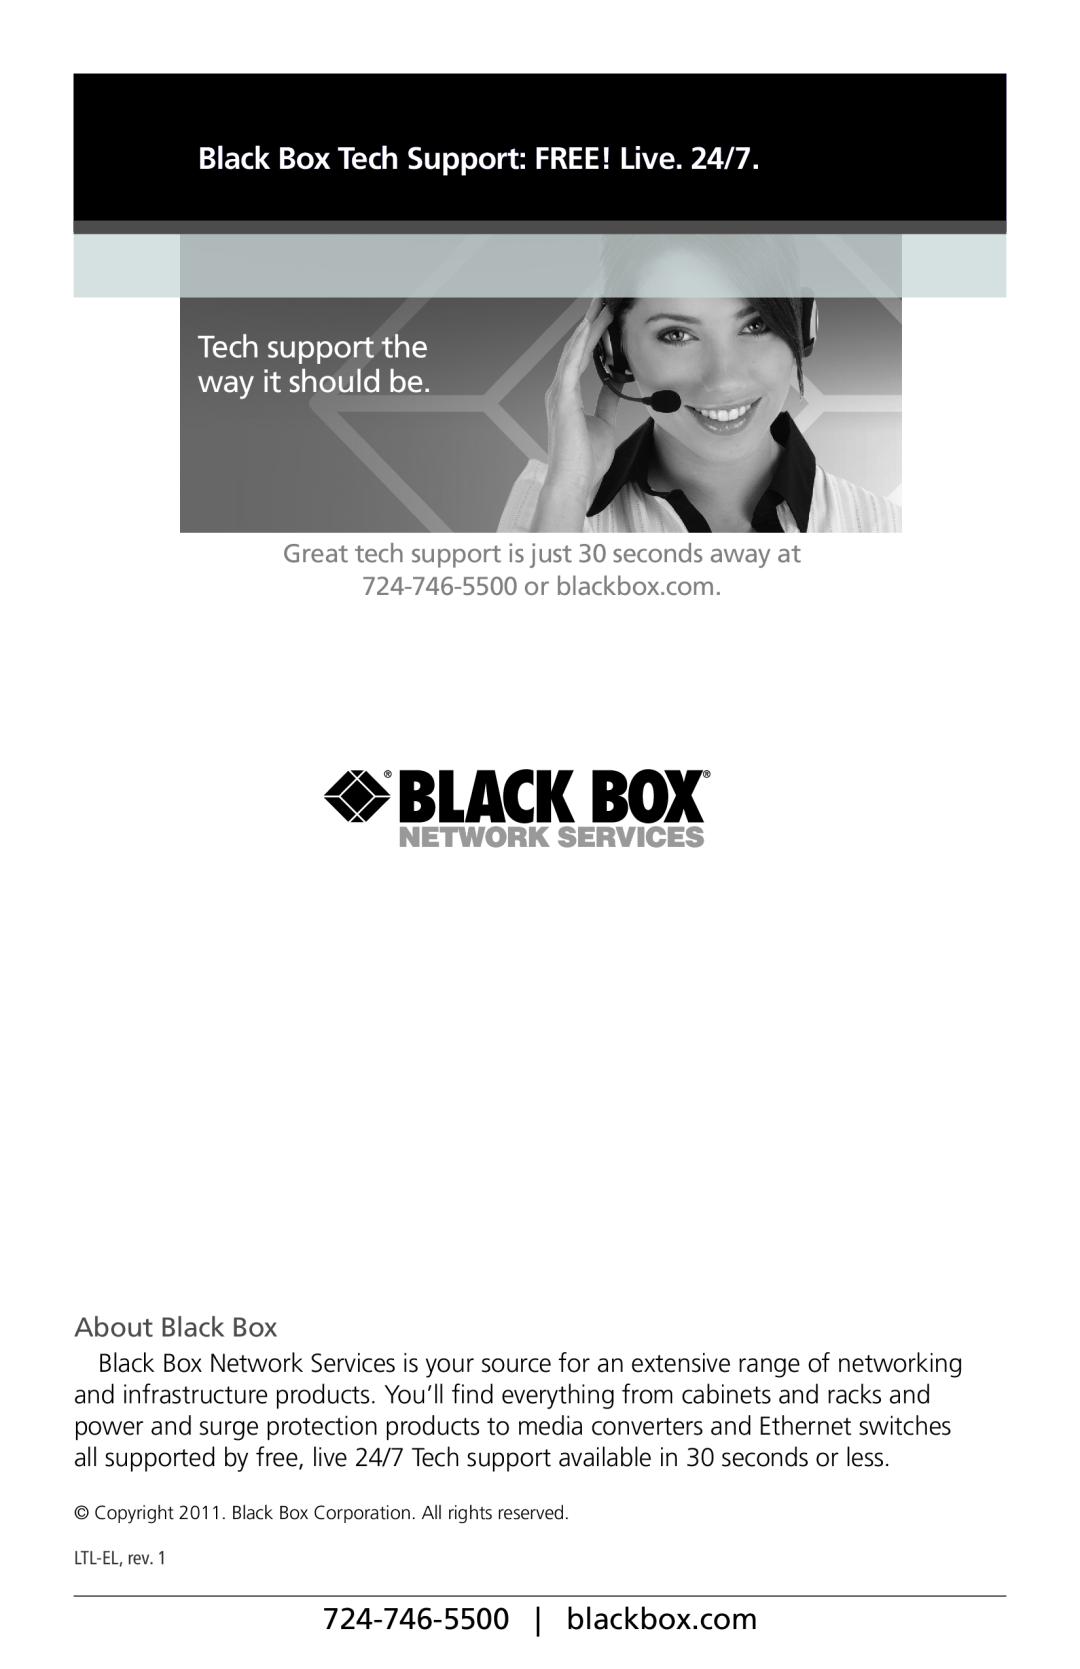 Black Box LTL-KL Tech support the way it should be, Black Box Tech Support FREE! Live. 24/7, blackbox.com, About Black Box 